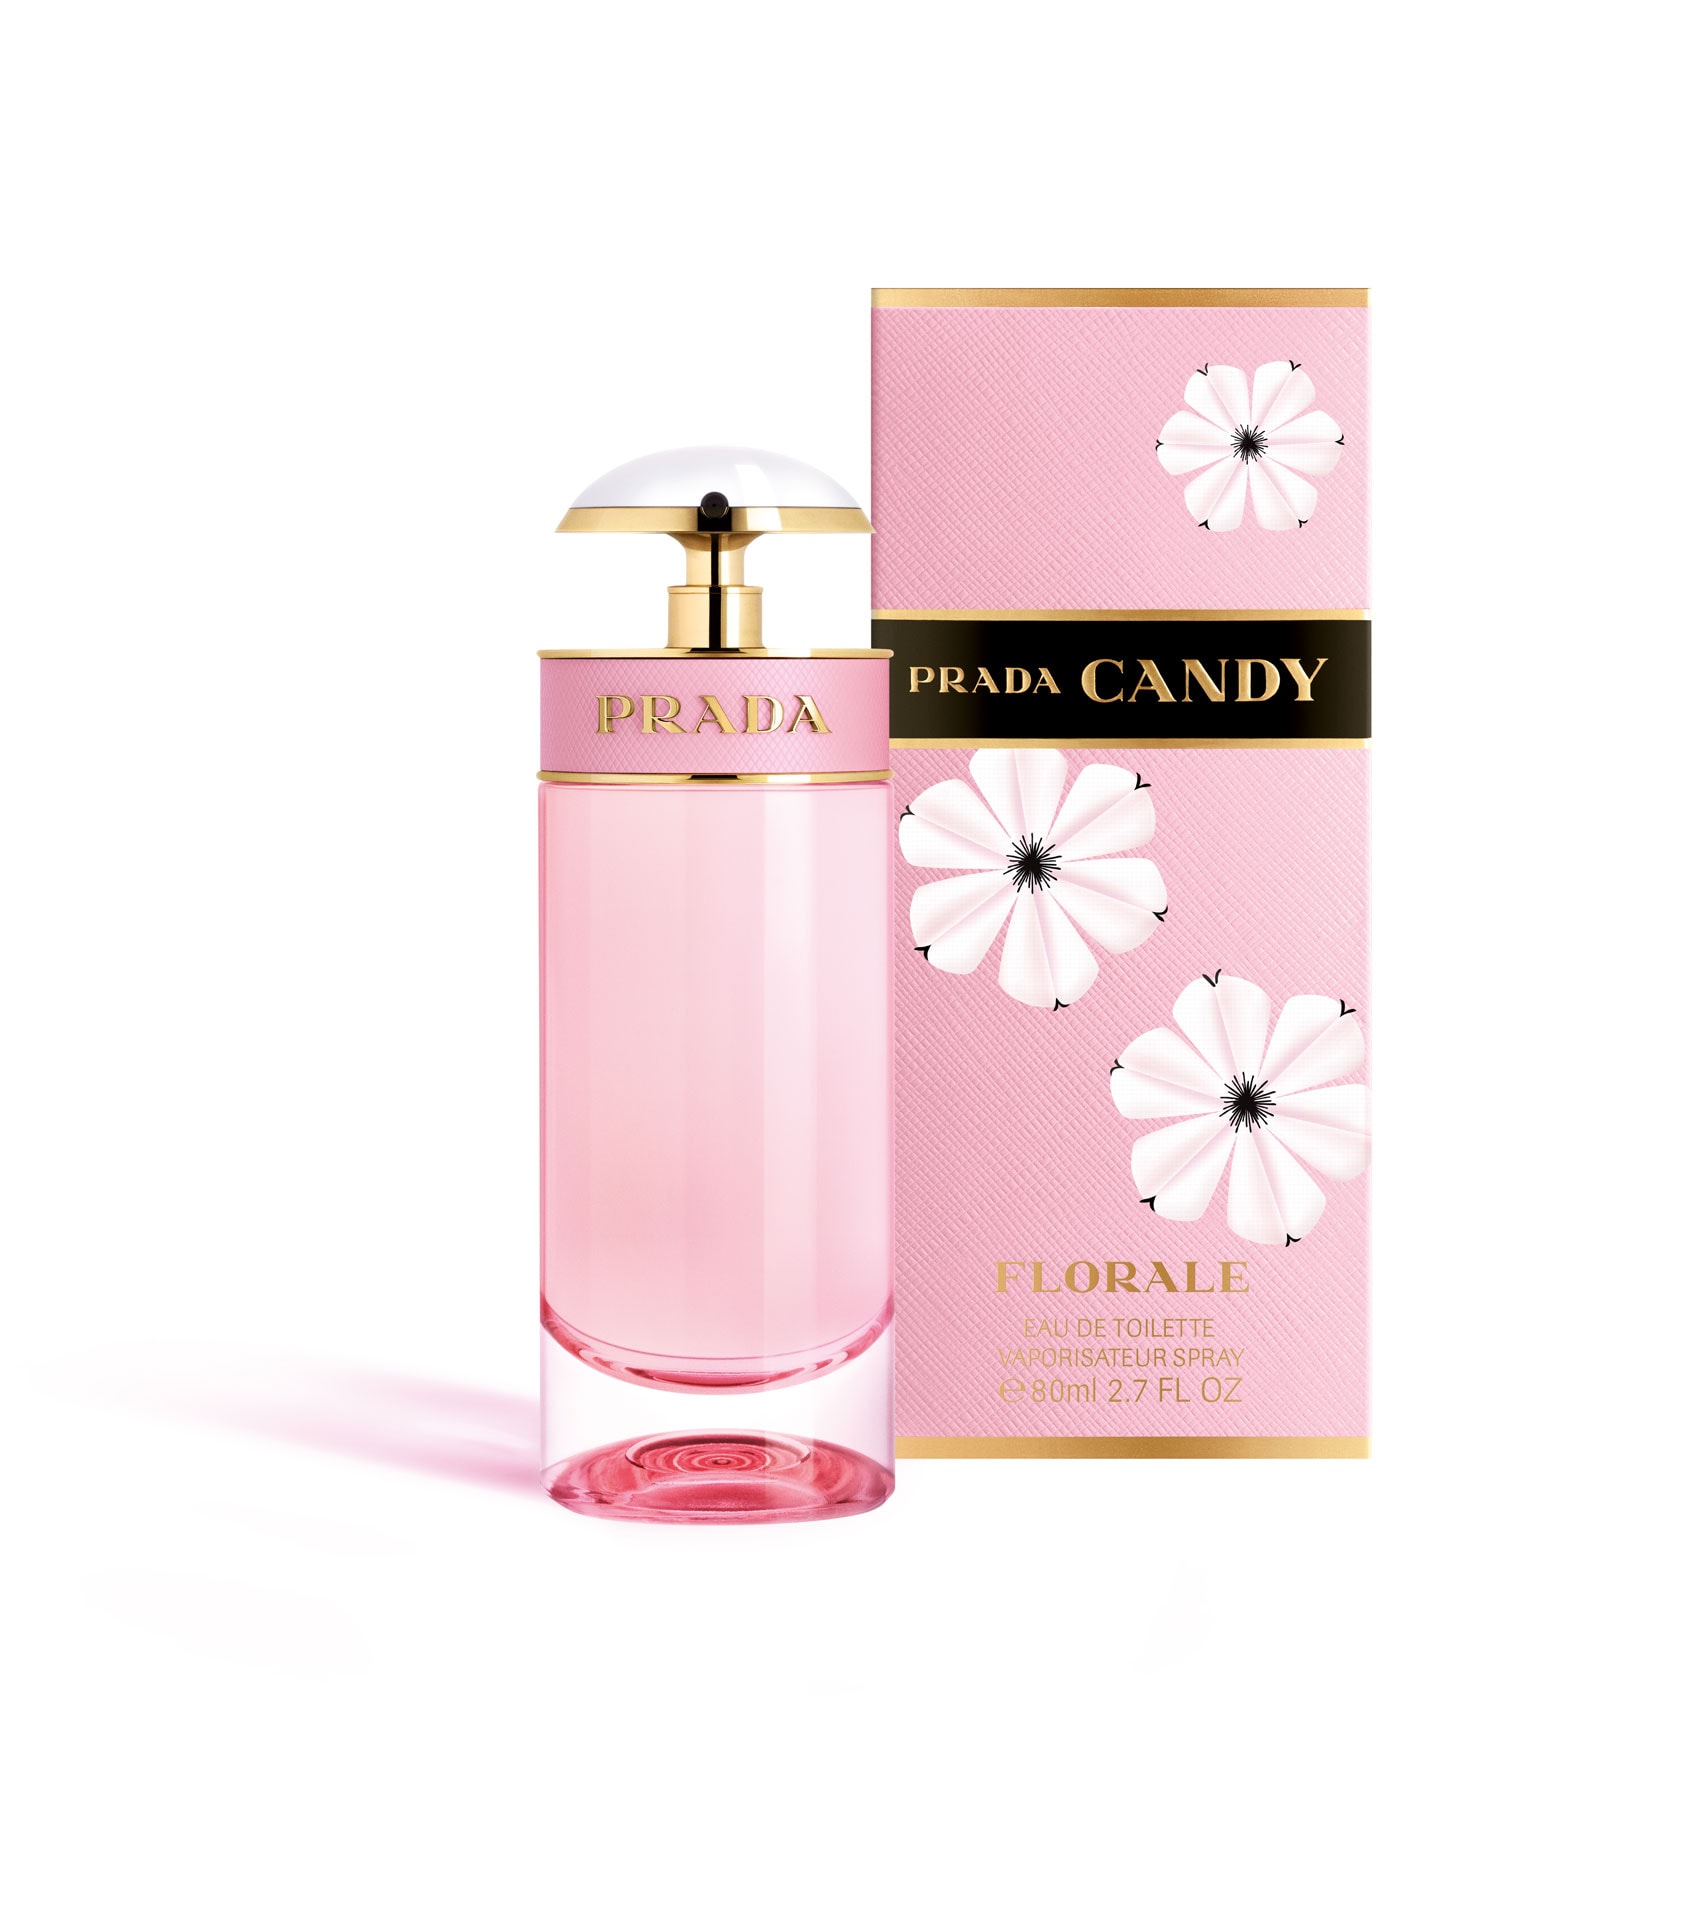 Prada Candy Florale » Prada » The Parfumerie » Sri Lanka